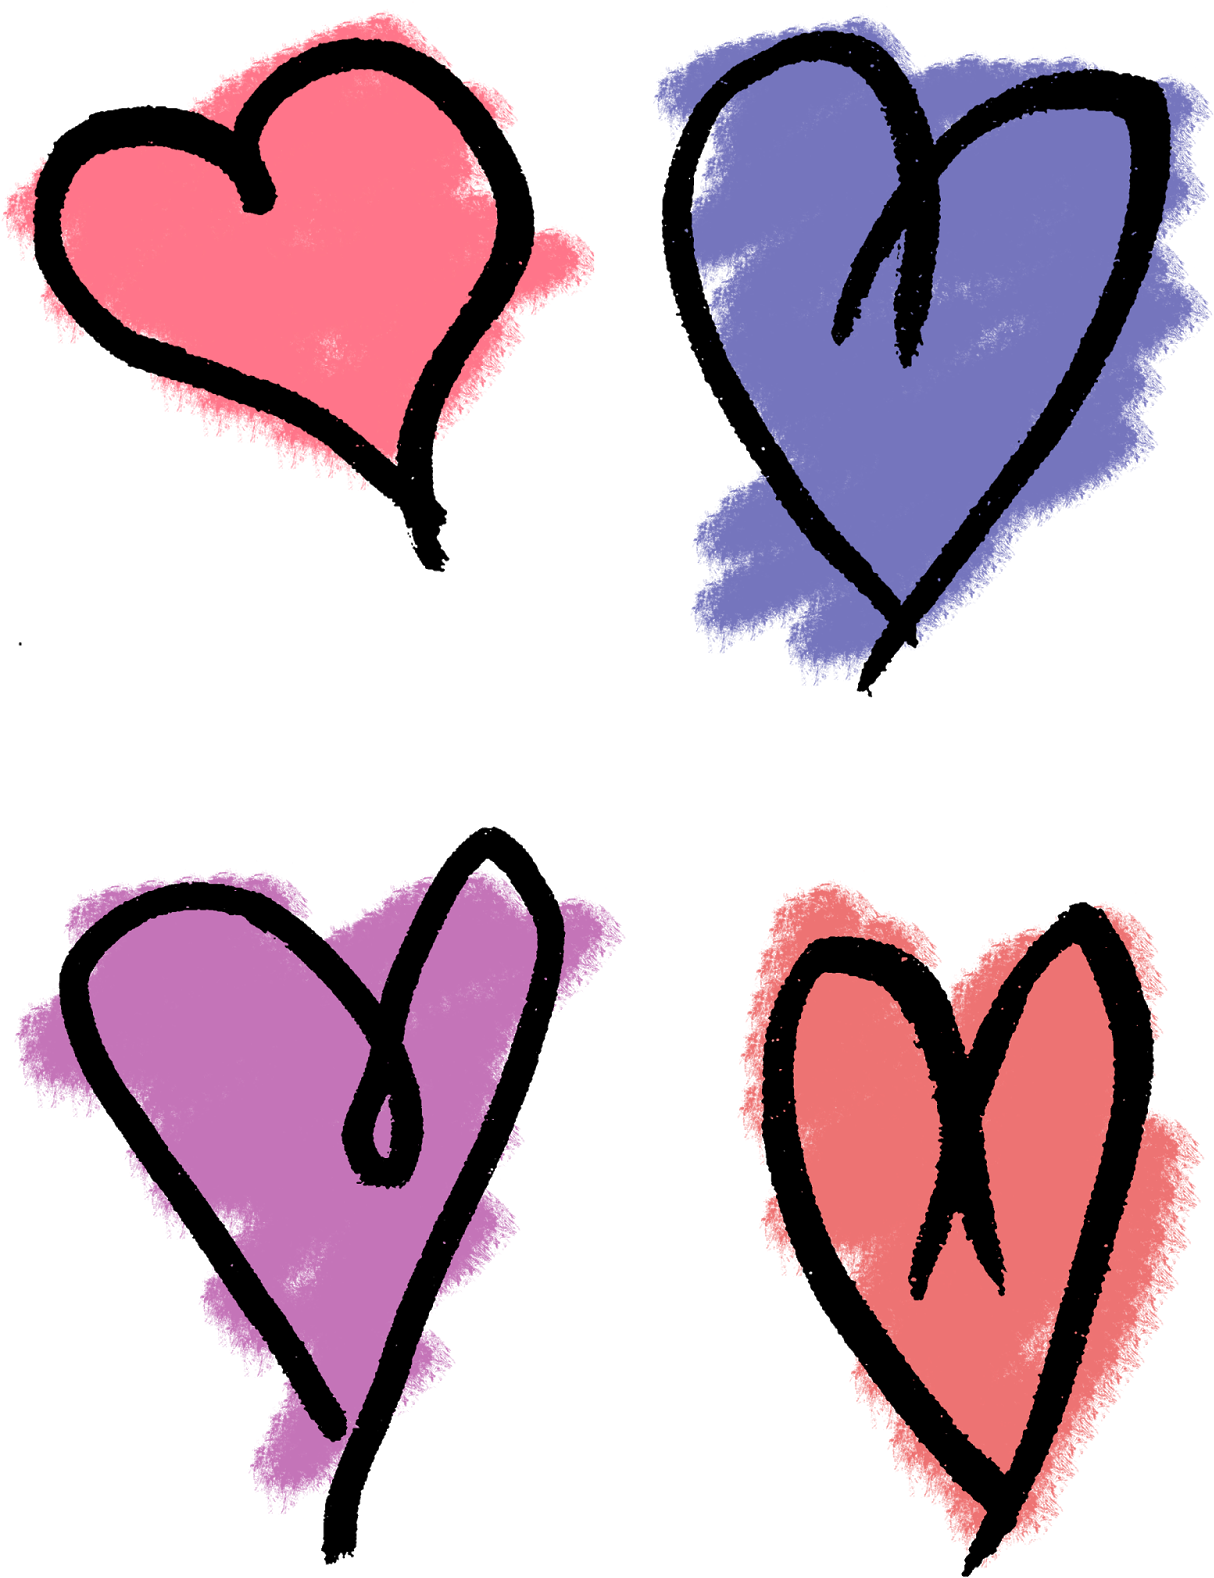 Heart Hand Drawn Artwork Collage Sheet Image Printable - Heart (1237x1600)